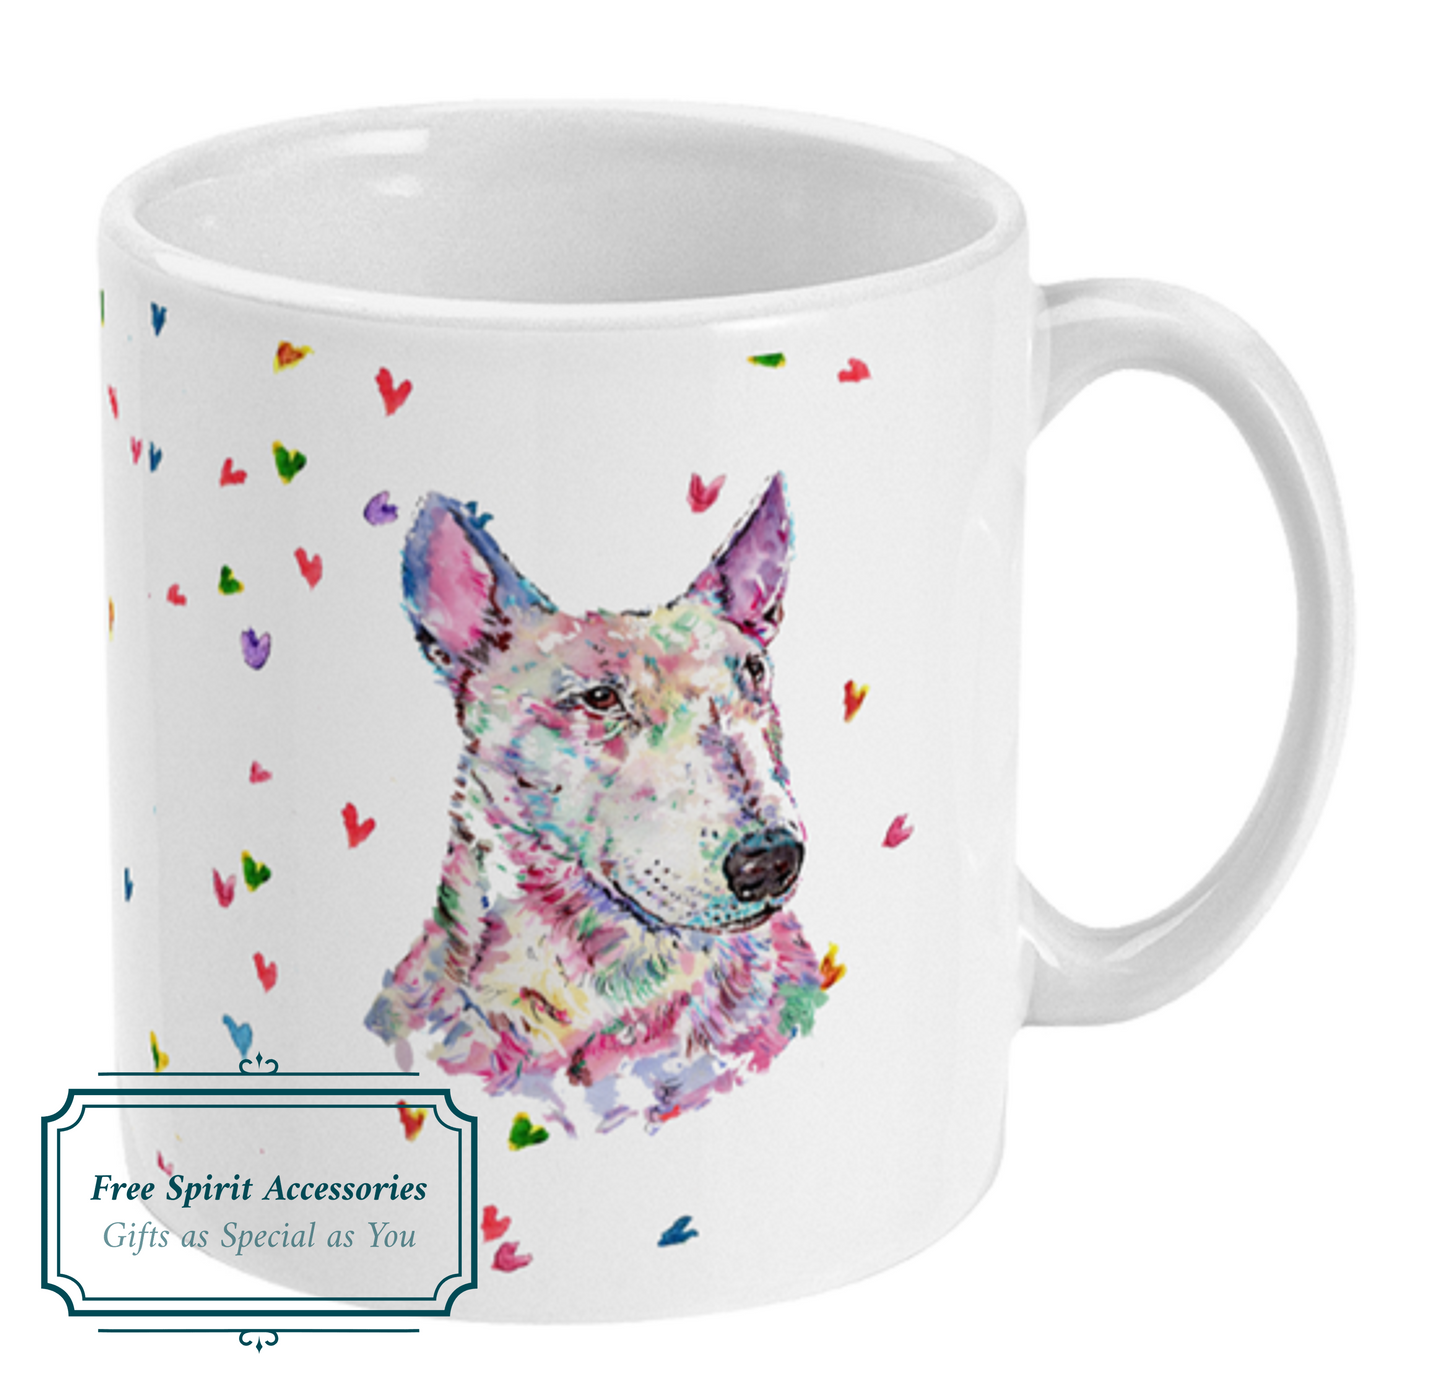  Rainbow Splashed English Bull Terrier Mug by Free Spirit Accessories sold by Free Spirit Accessories